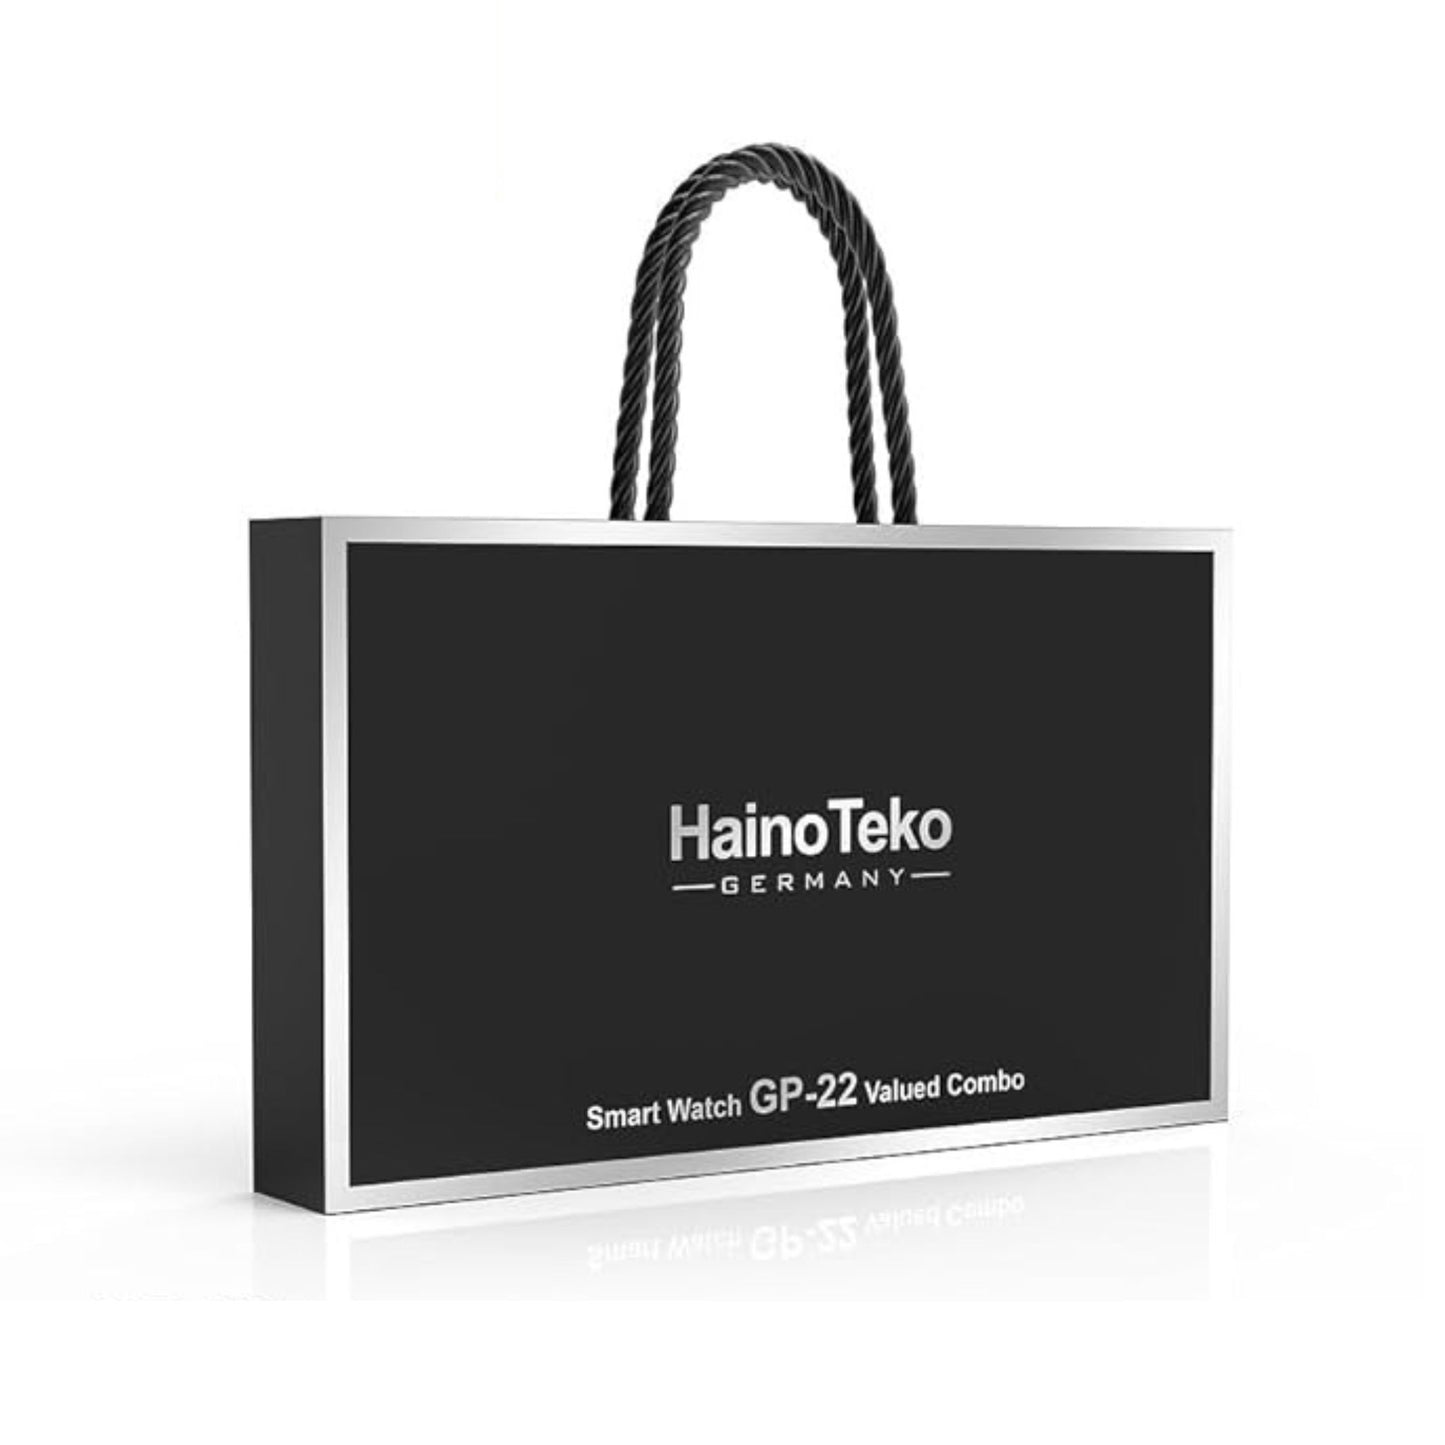 Haino Teko GP 22 Smart Watch Gift Box with Sunglasses, Belt and Neckband for Men and Boys_Black